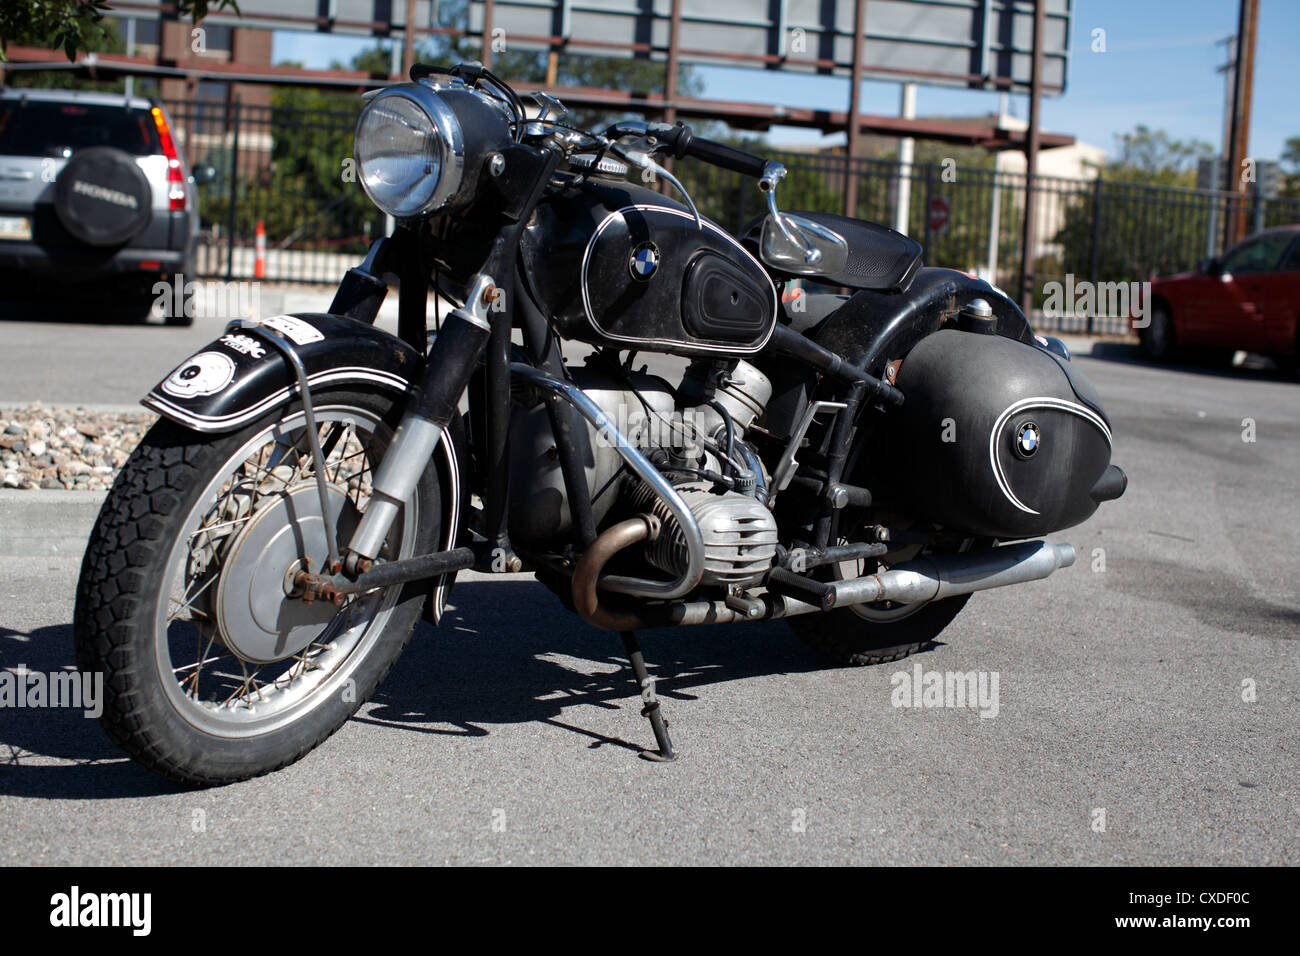 Classic BMW motorcycle Stock Photo: 50698940 - Alamy